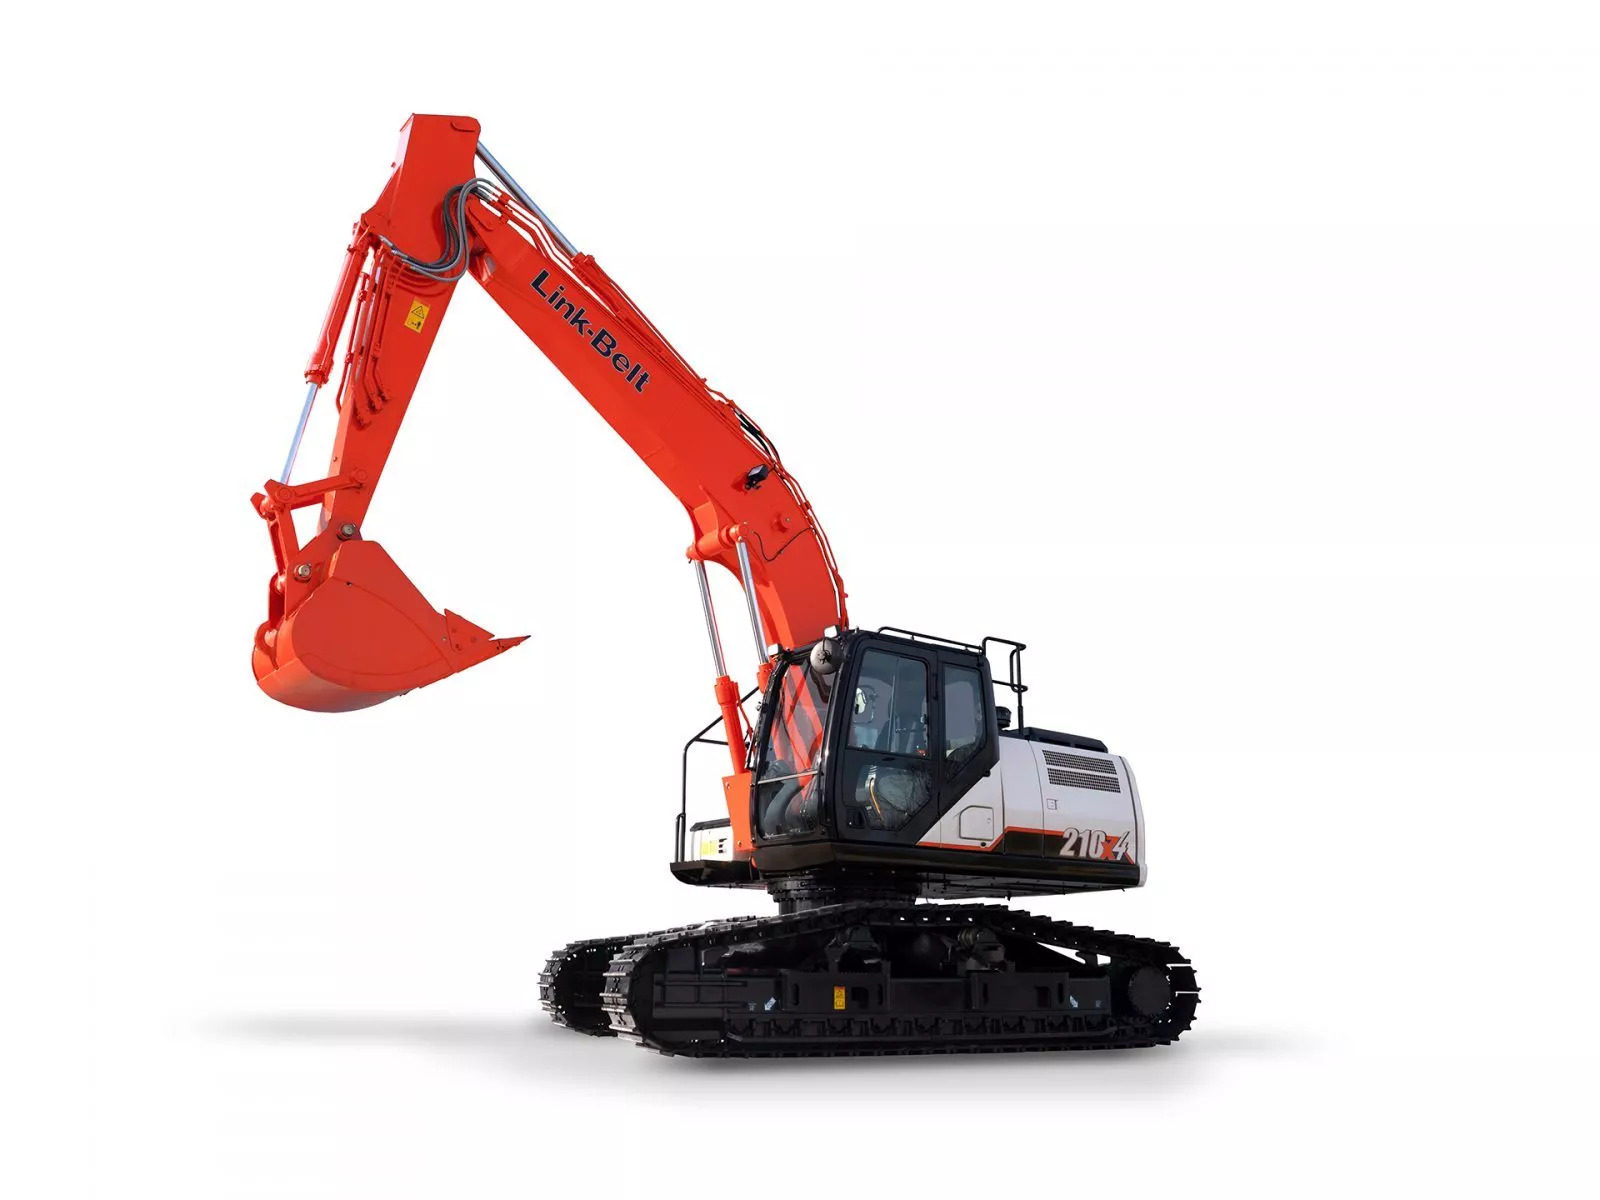 Link-Belt excavator 210X4 Heavy duty | Product Link-Belt excavator 210X4 Heavy duty